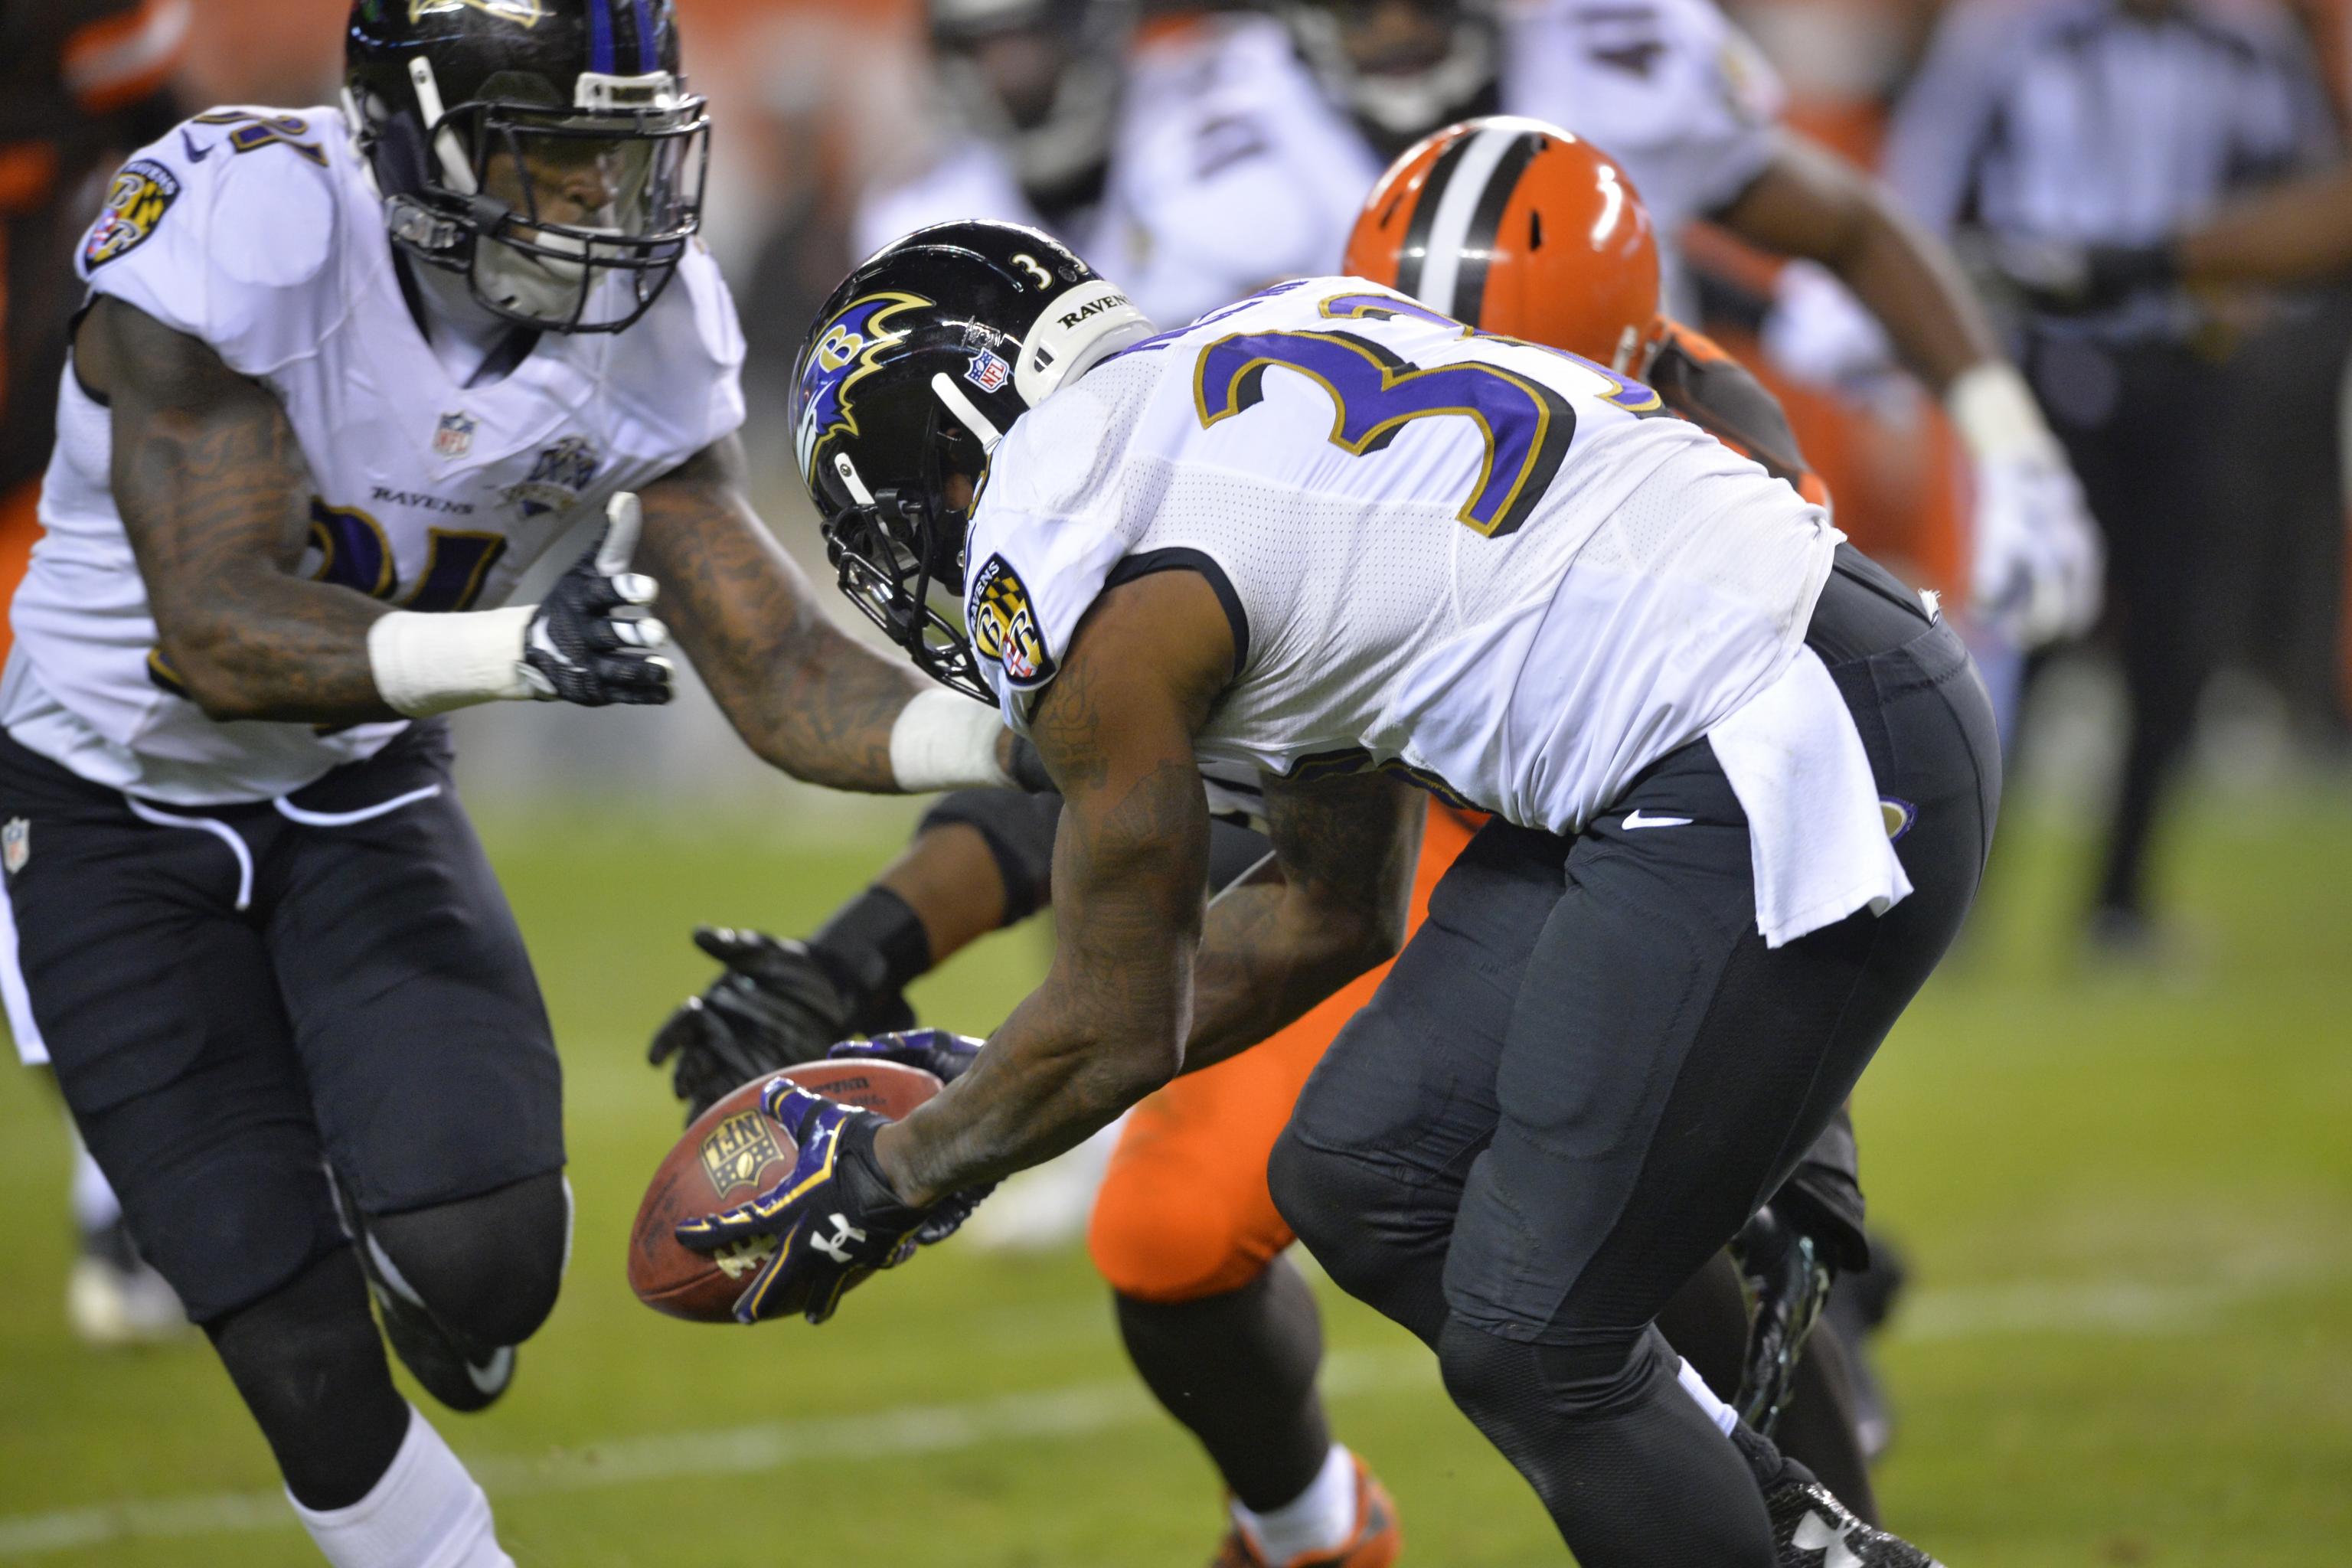 NFL Rules Ravens Were Not Offside on Game-Winning Blocked Field